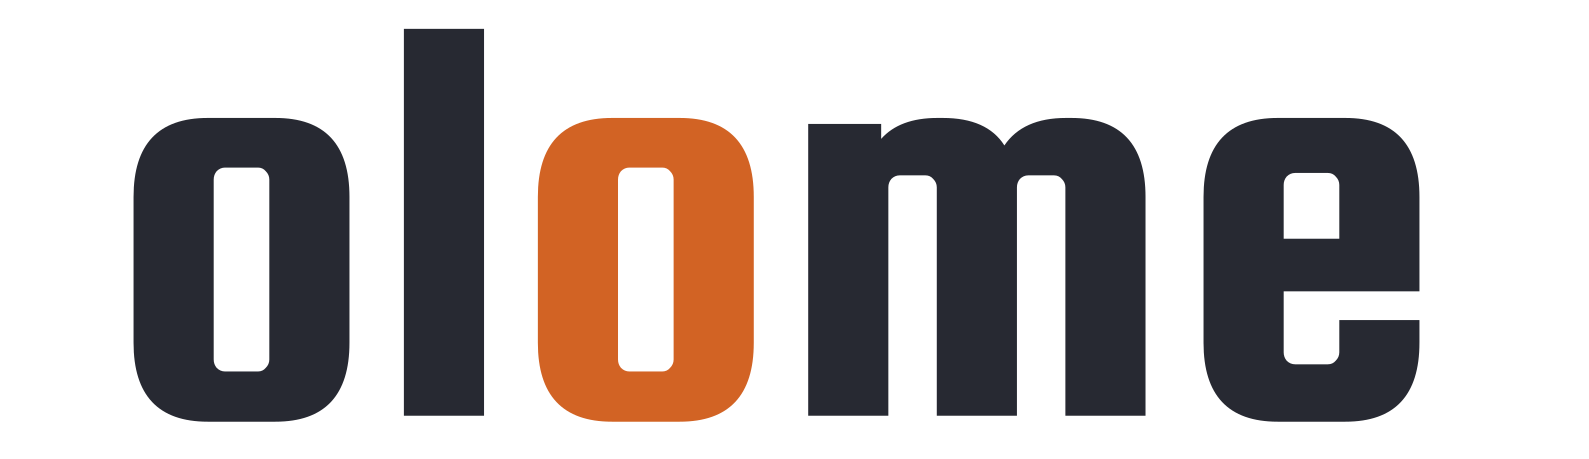 olome_logo_orange_o_3_1_transp_bg_no_border (3)